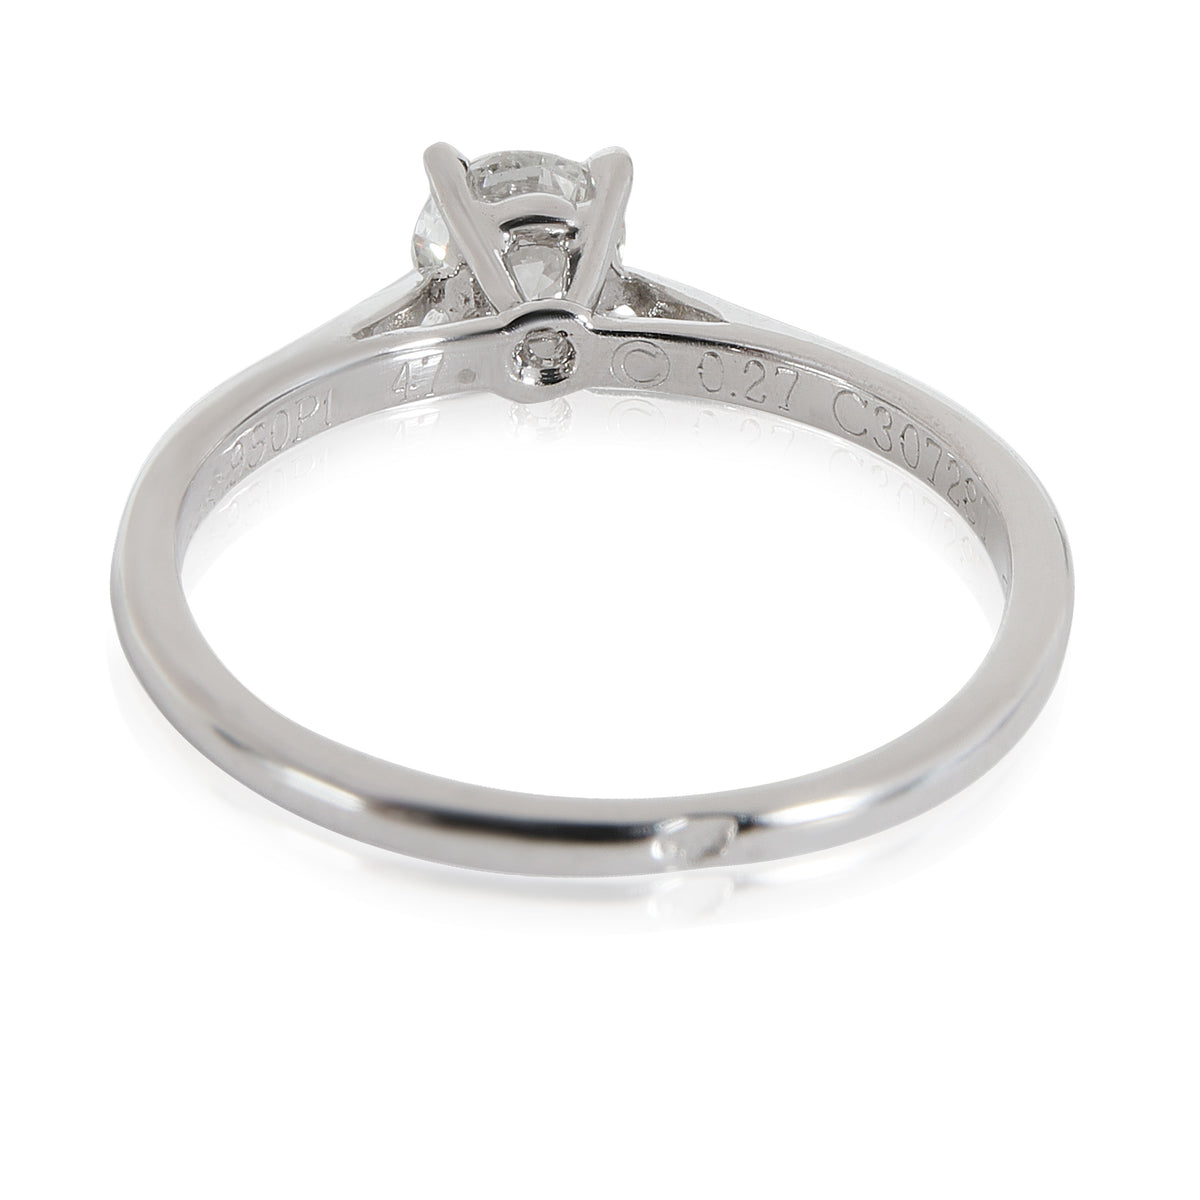 Cartier 1895 Diamond Engagement Ring in  Platinum F VVS2 0.27 CTW